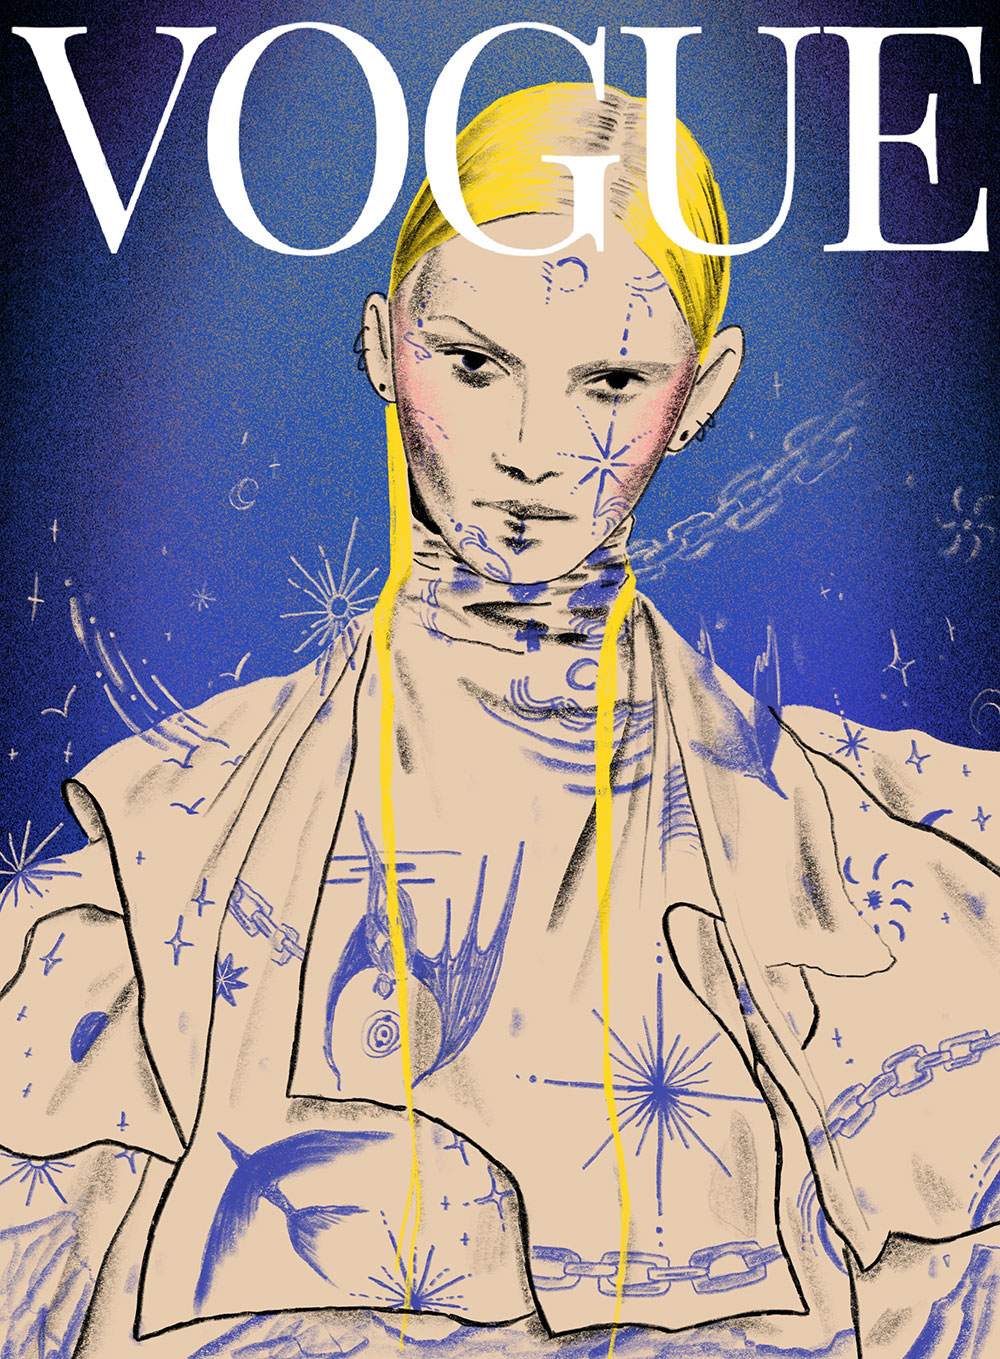 Illustration von Wadim Petunin: Jean-Paul-Gaultier (fiktives Vogue-Cover)